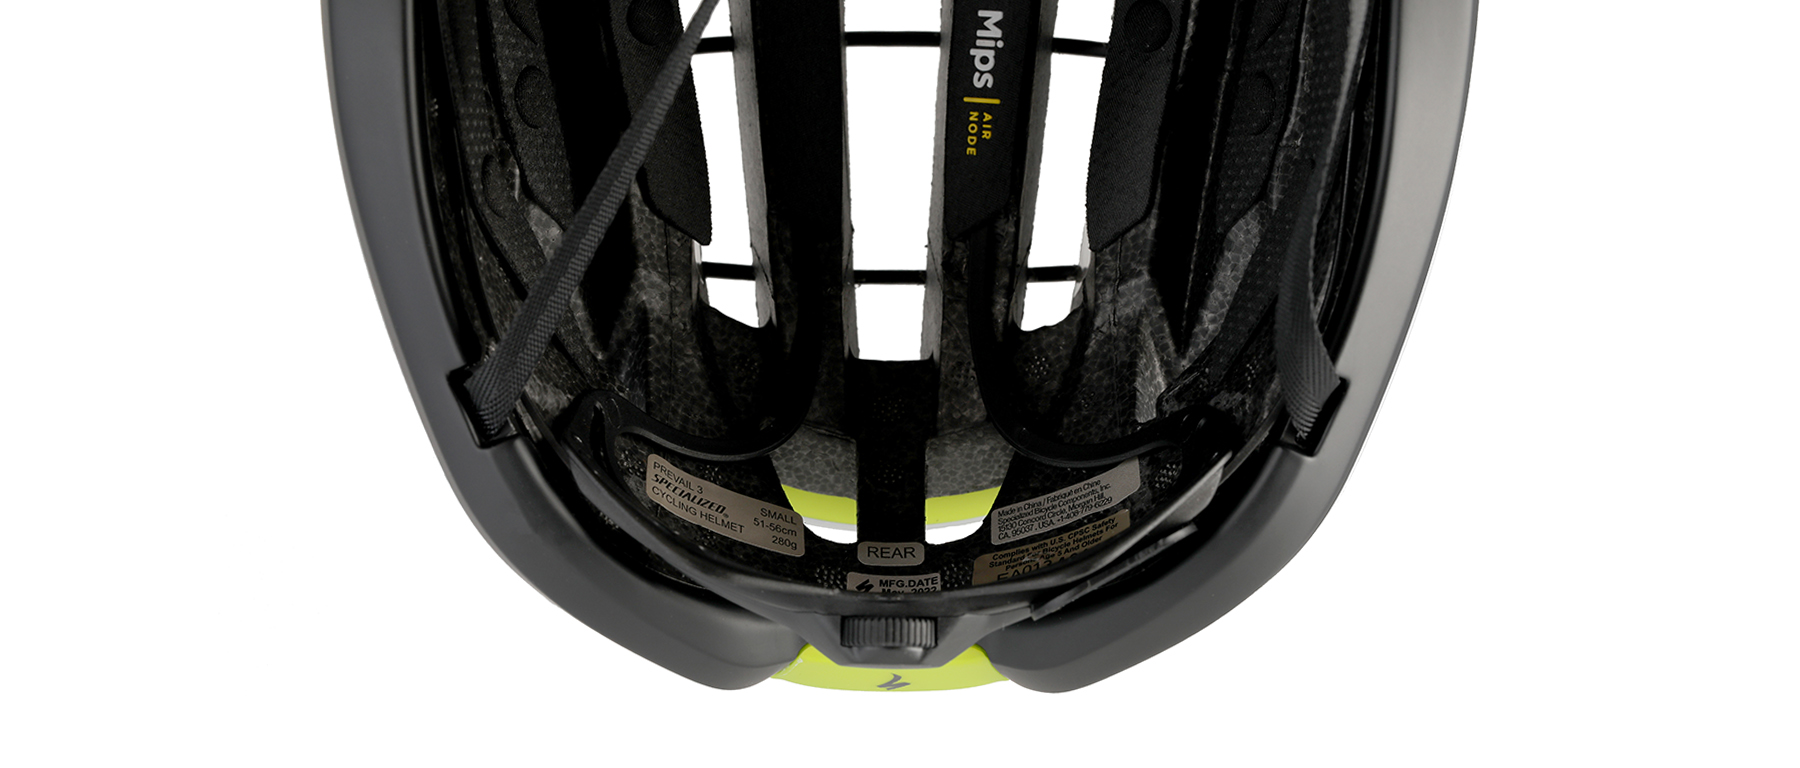 Specialized S-Works Prevail 3 Helmet